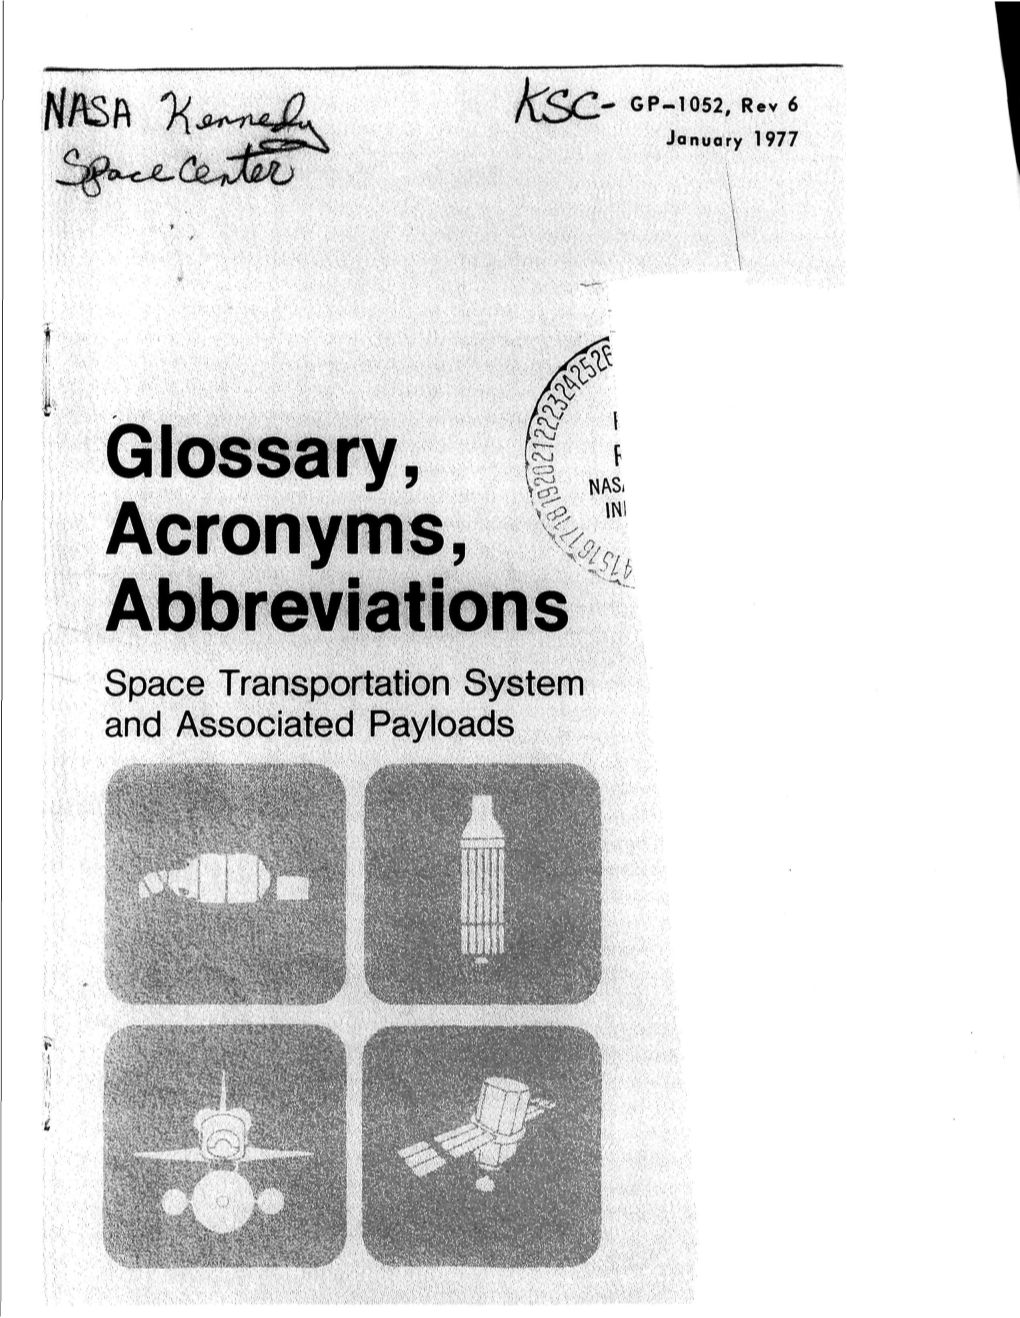 Glossary, Acronyms, Abbreviations